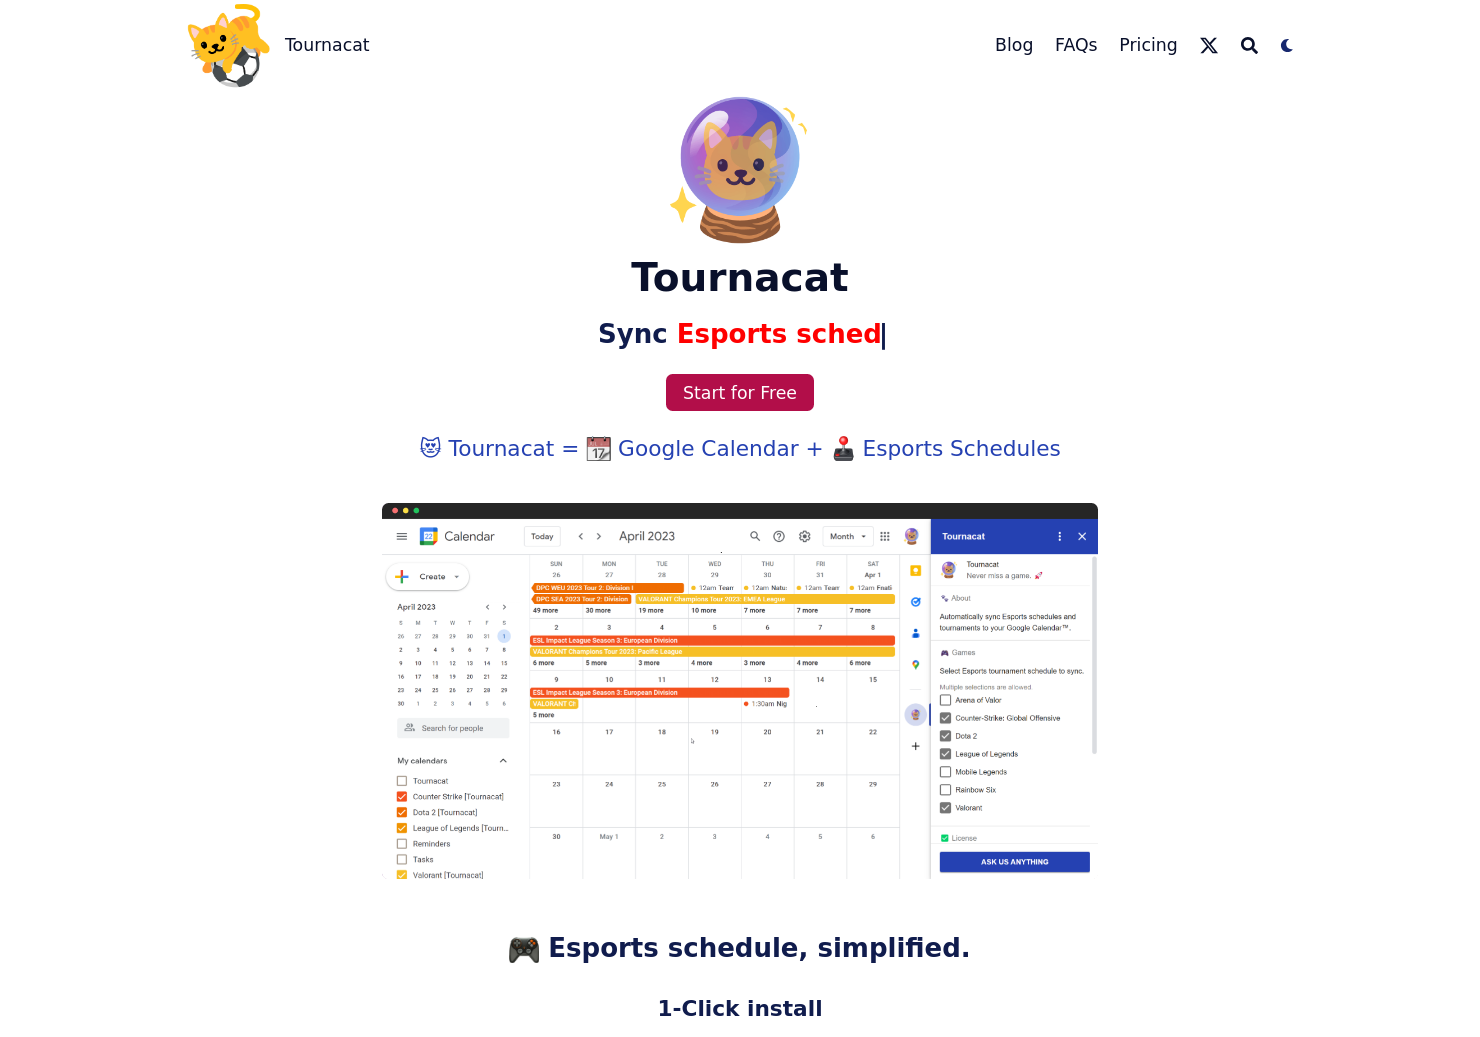 startuptile Tournacat-Sync Esports schedules to Google Calendar automatically